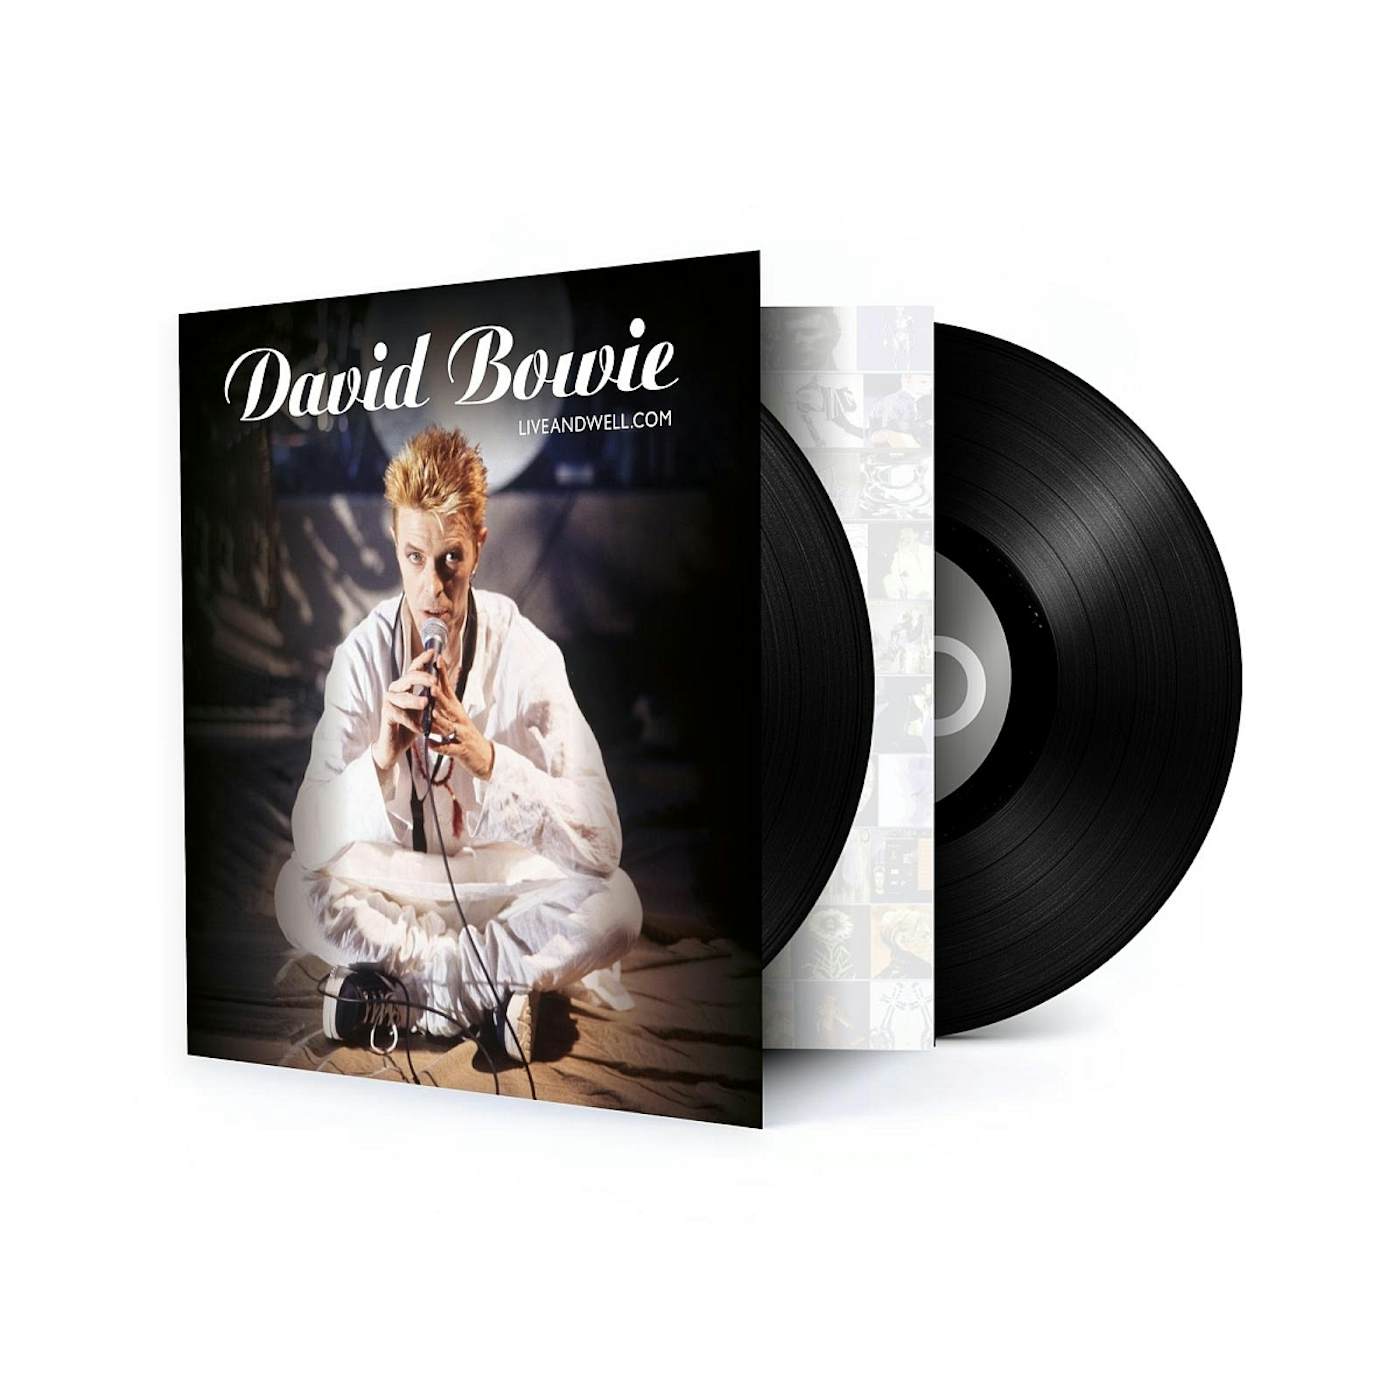 David Bowie Liveandwell.com (2020 Remaster) LP (Vinyl)